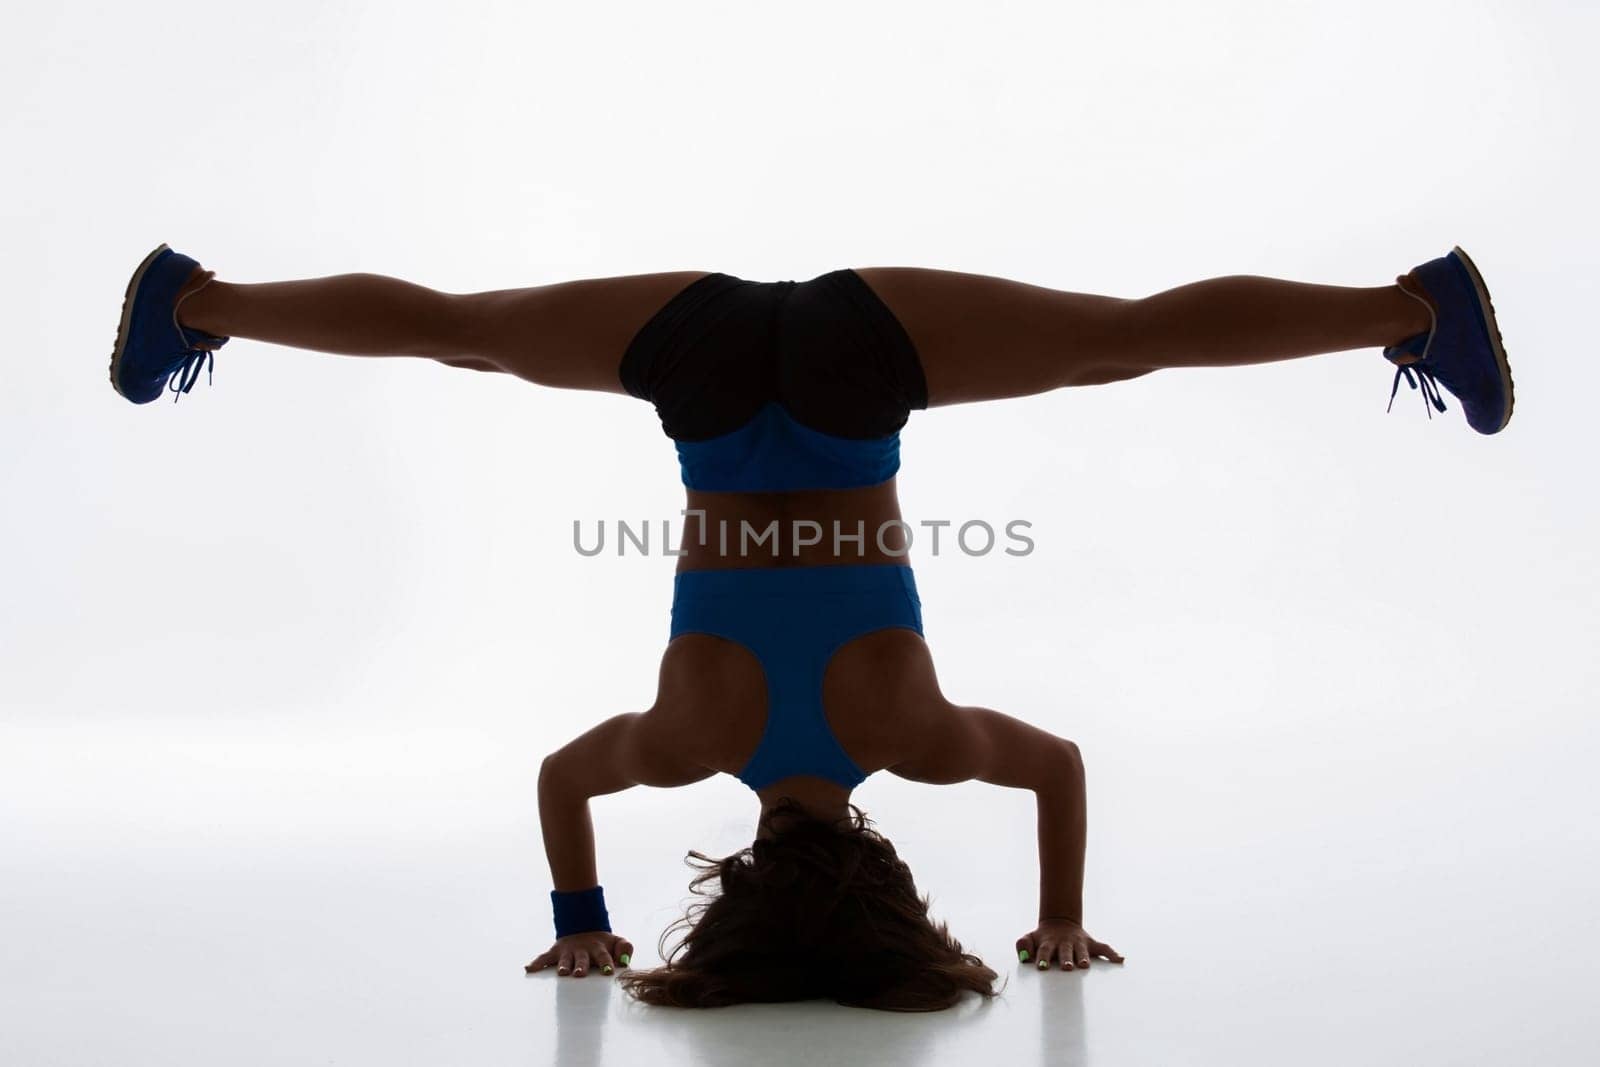 Sporty flexible girl doing stretching exercise by nazarovsergey